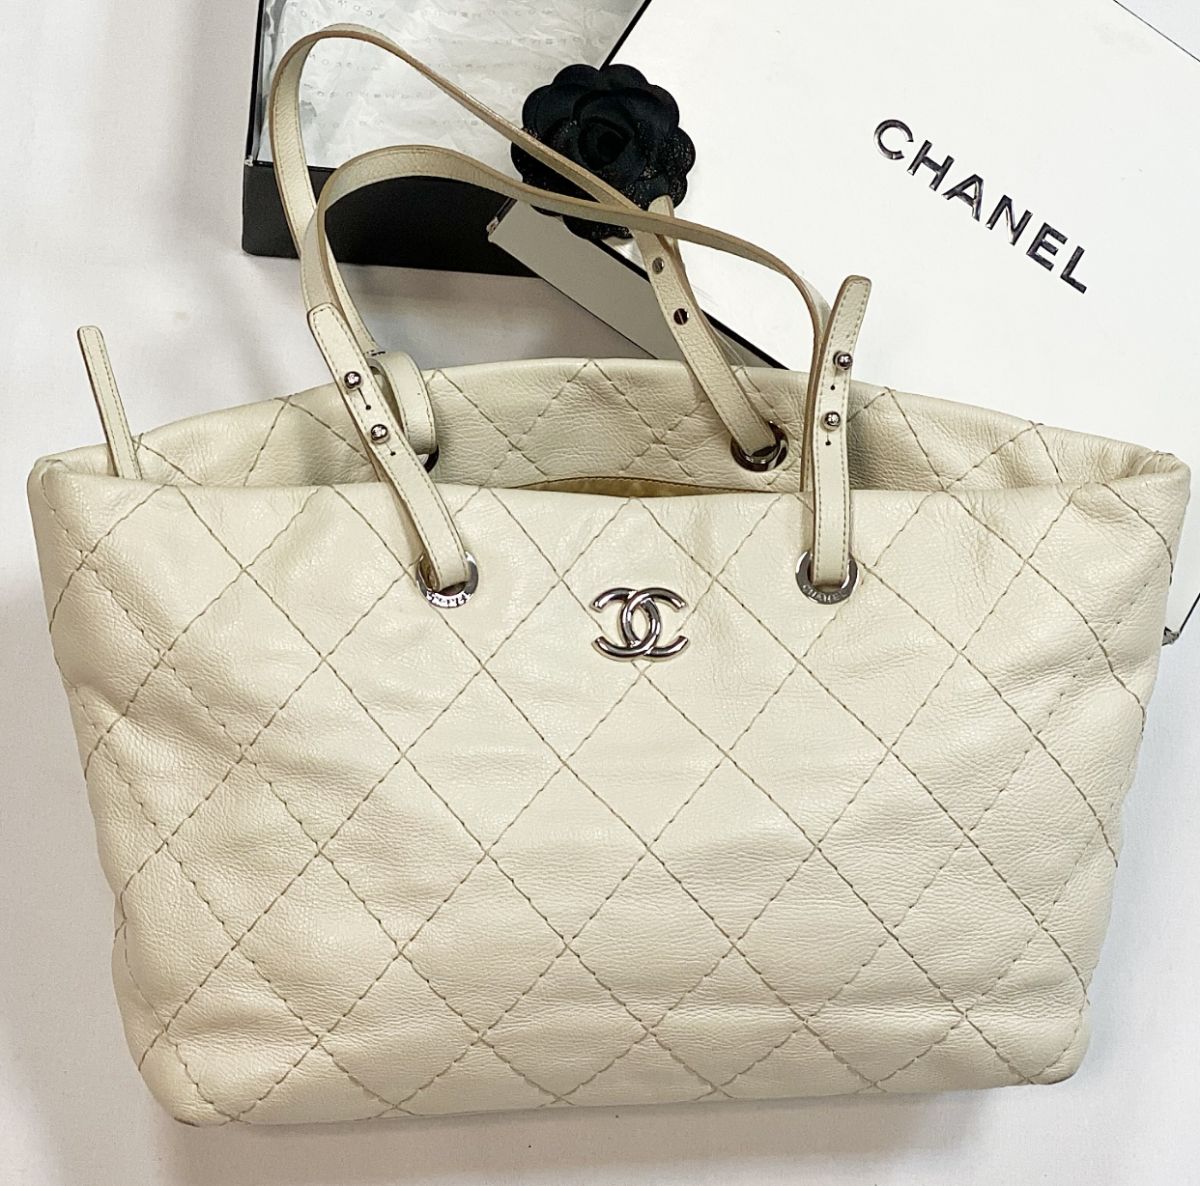 Сумка Chanel размер 35/25 цена 76 925 руб 